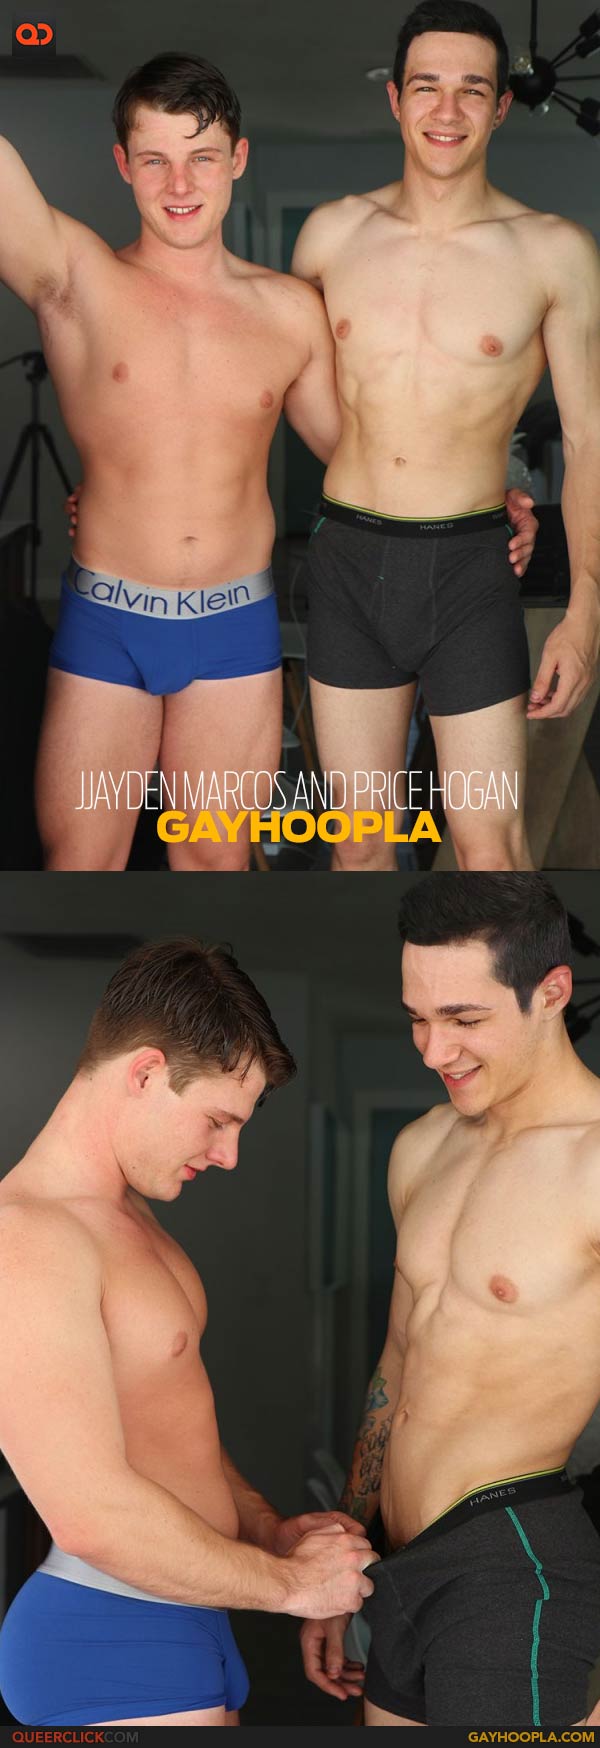 Afvist lineær Have en picnic GayHoopla: Jayden Marcos Splits Price Hogan WIDE OPEN! - QueerClick